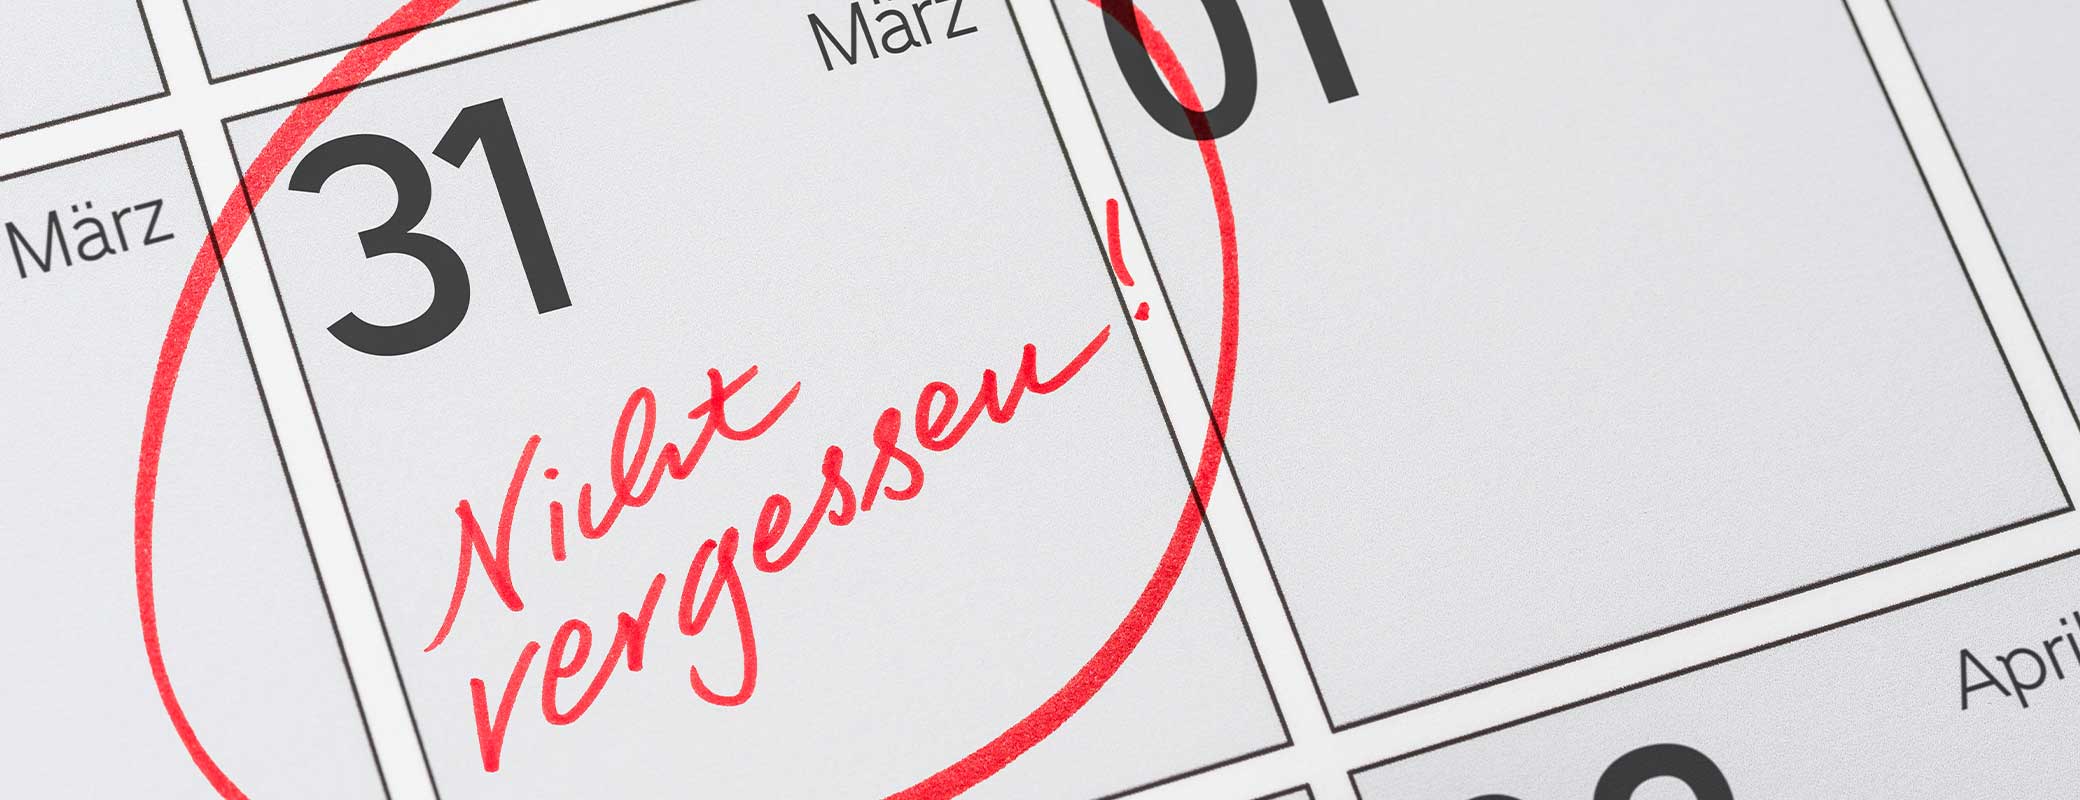 Achtung: Resturlaub verfällt Ende März